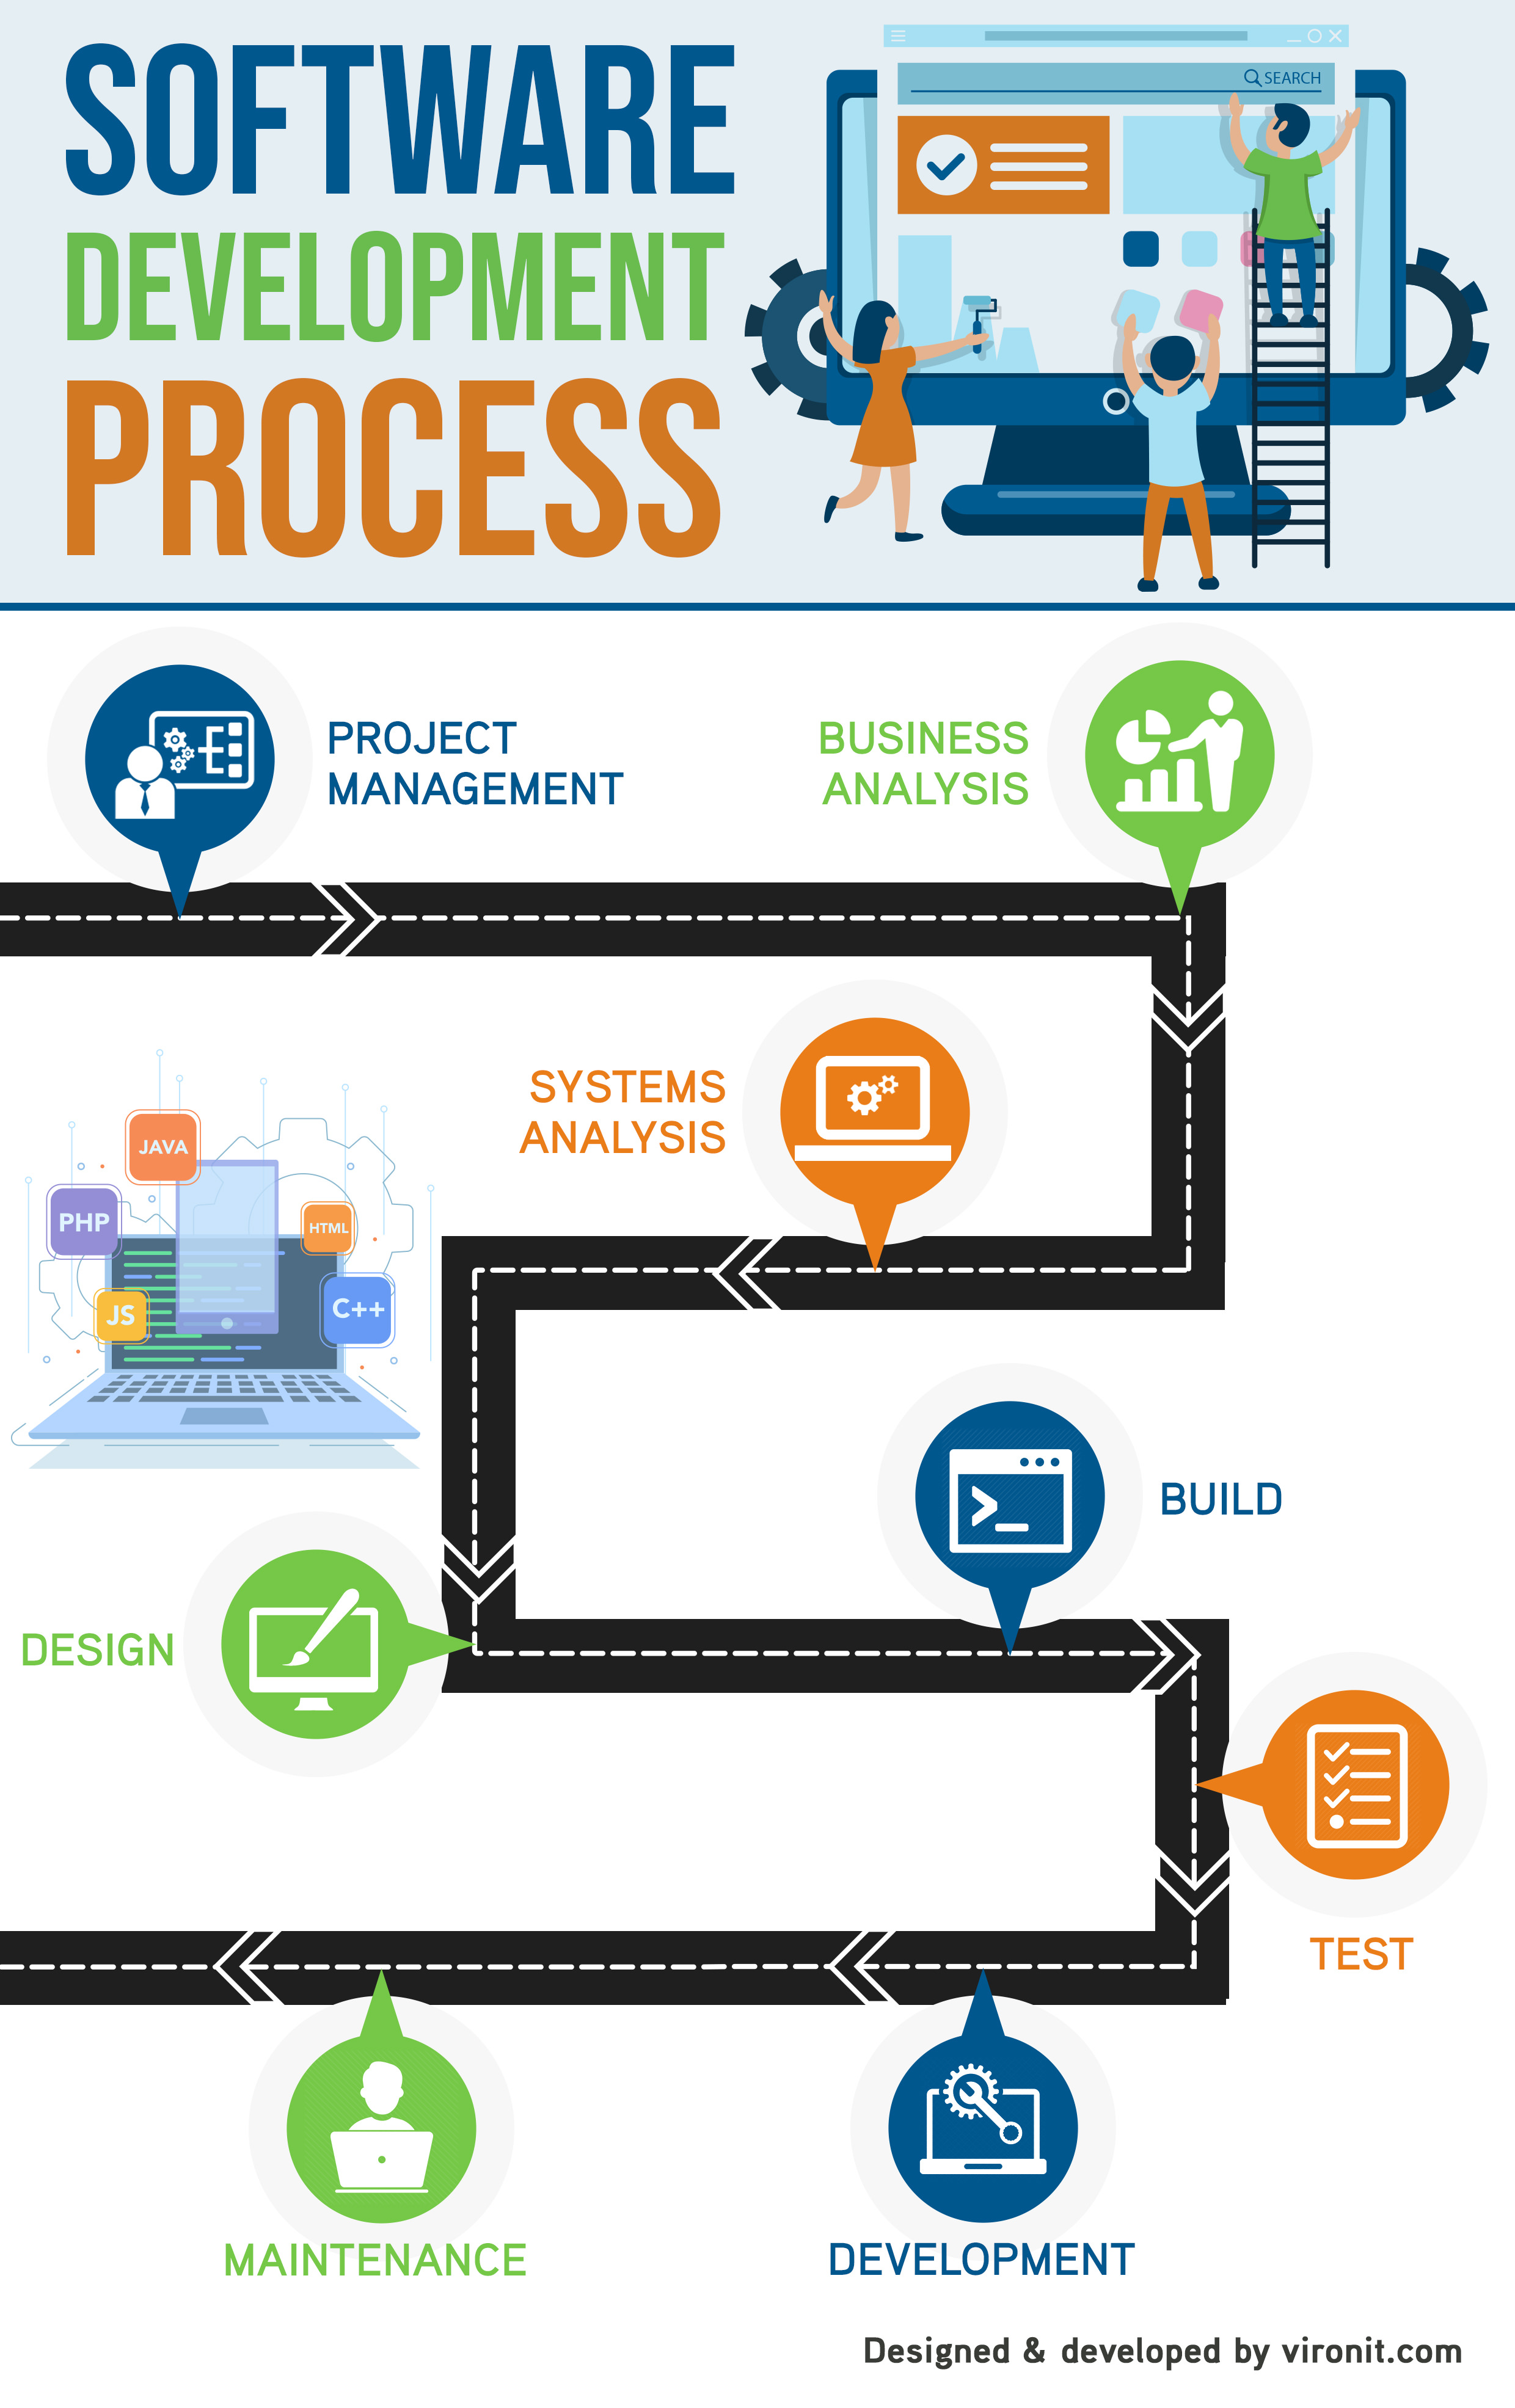 Software Development Process Infographic